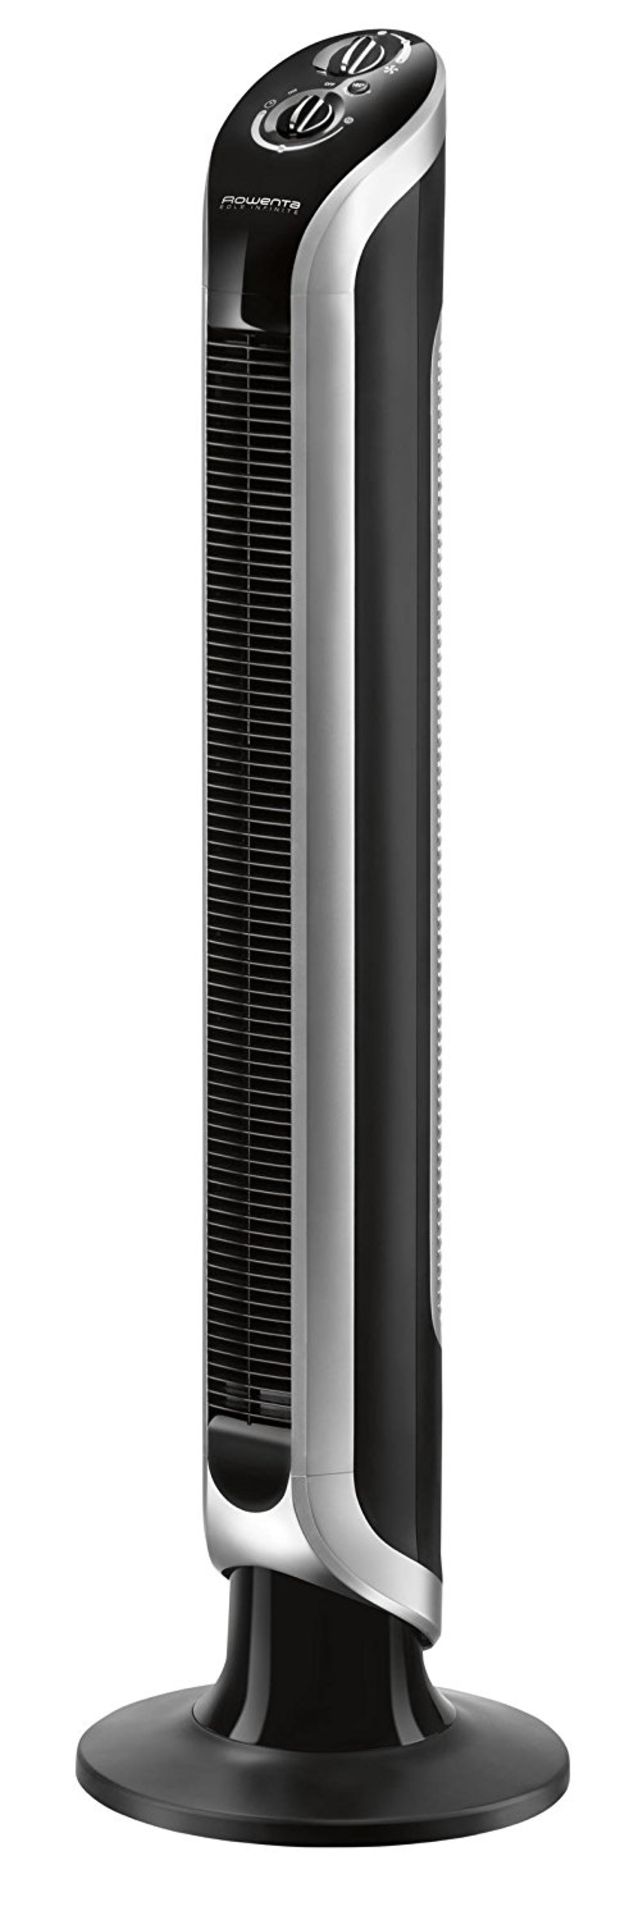 V Brand New Rowenta Eole Infinite Slim Tower Fan Unit - 180 Degrees Oscillation - Timer Function -